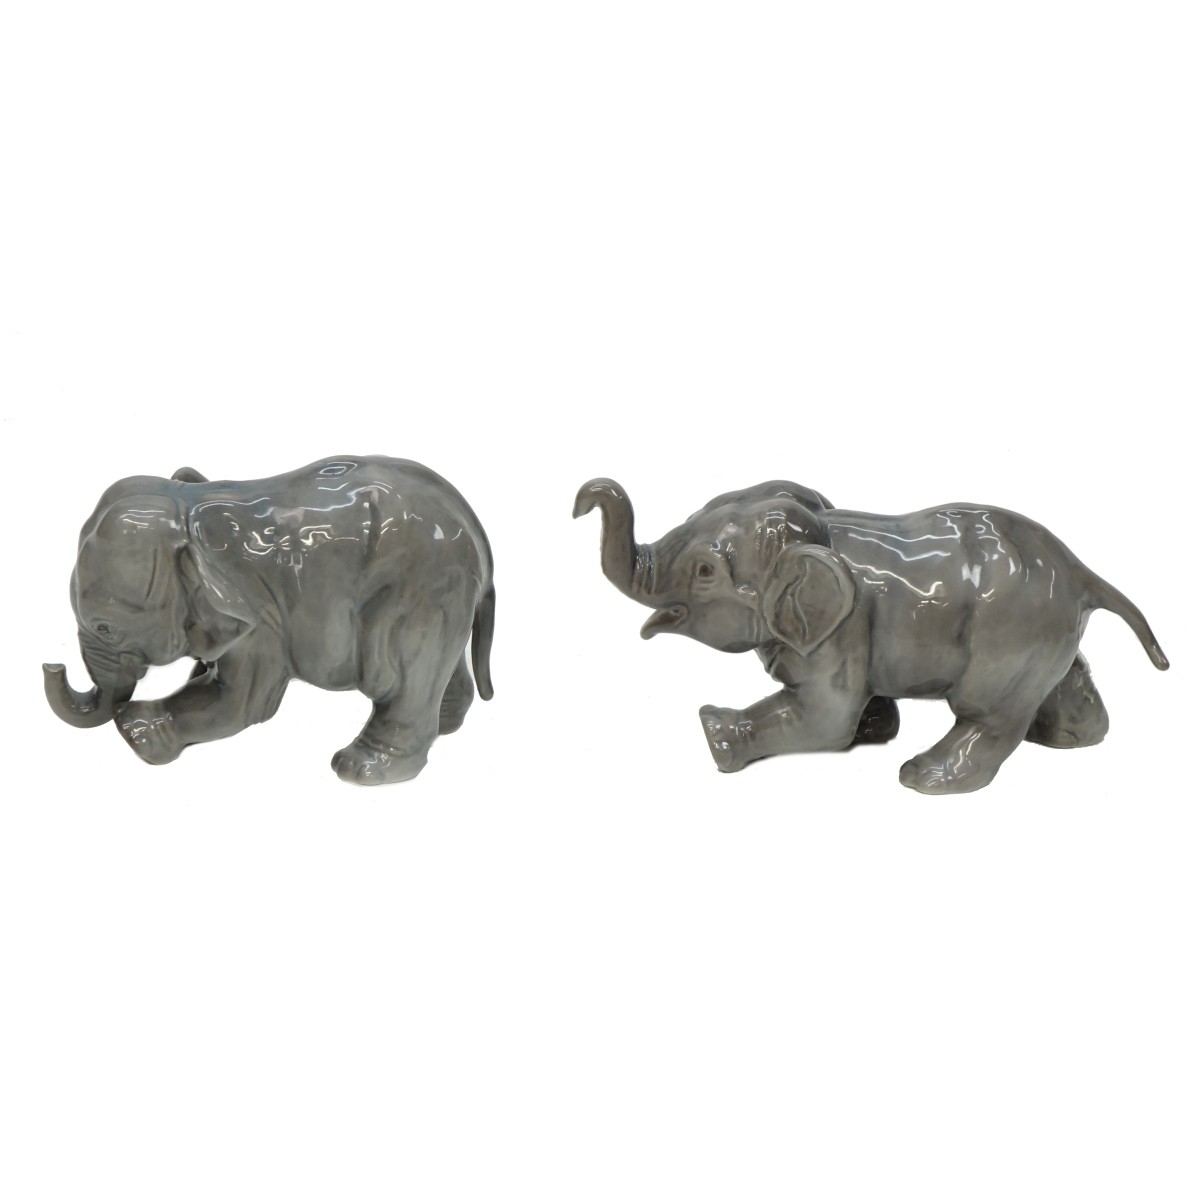 Two (2) Bing & Grondahl Porcelain Elephants